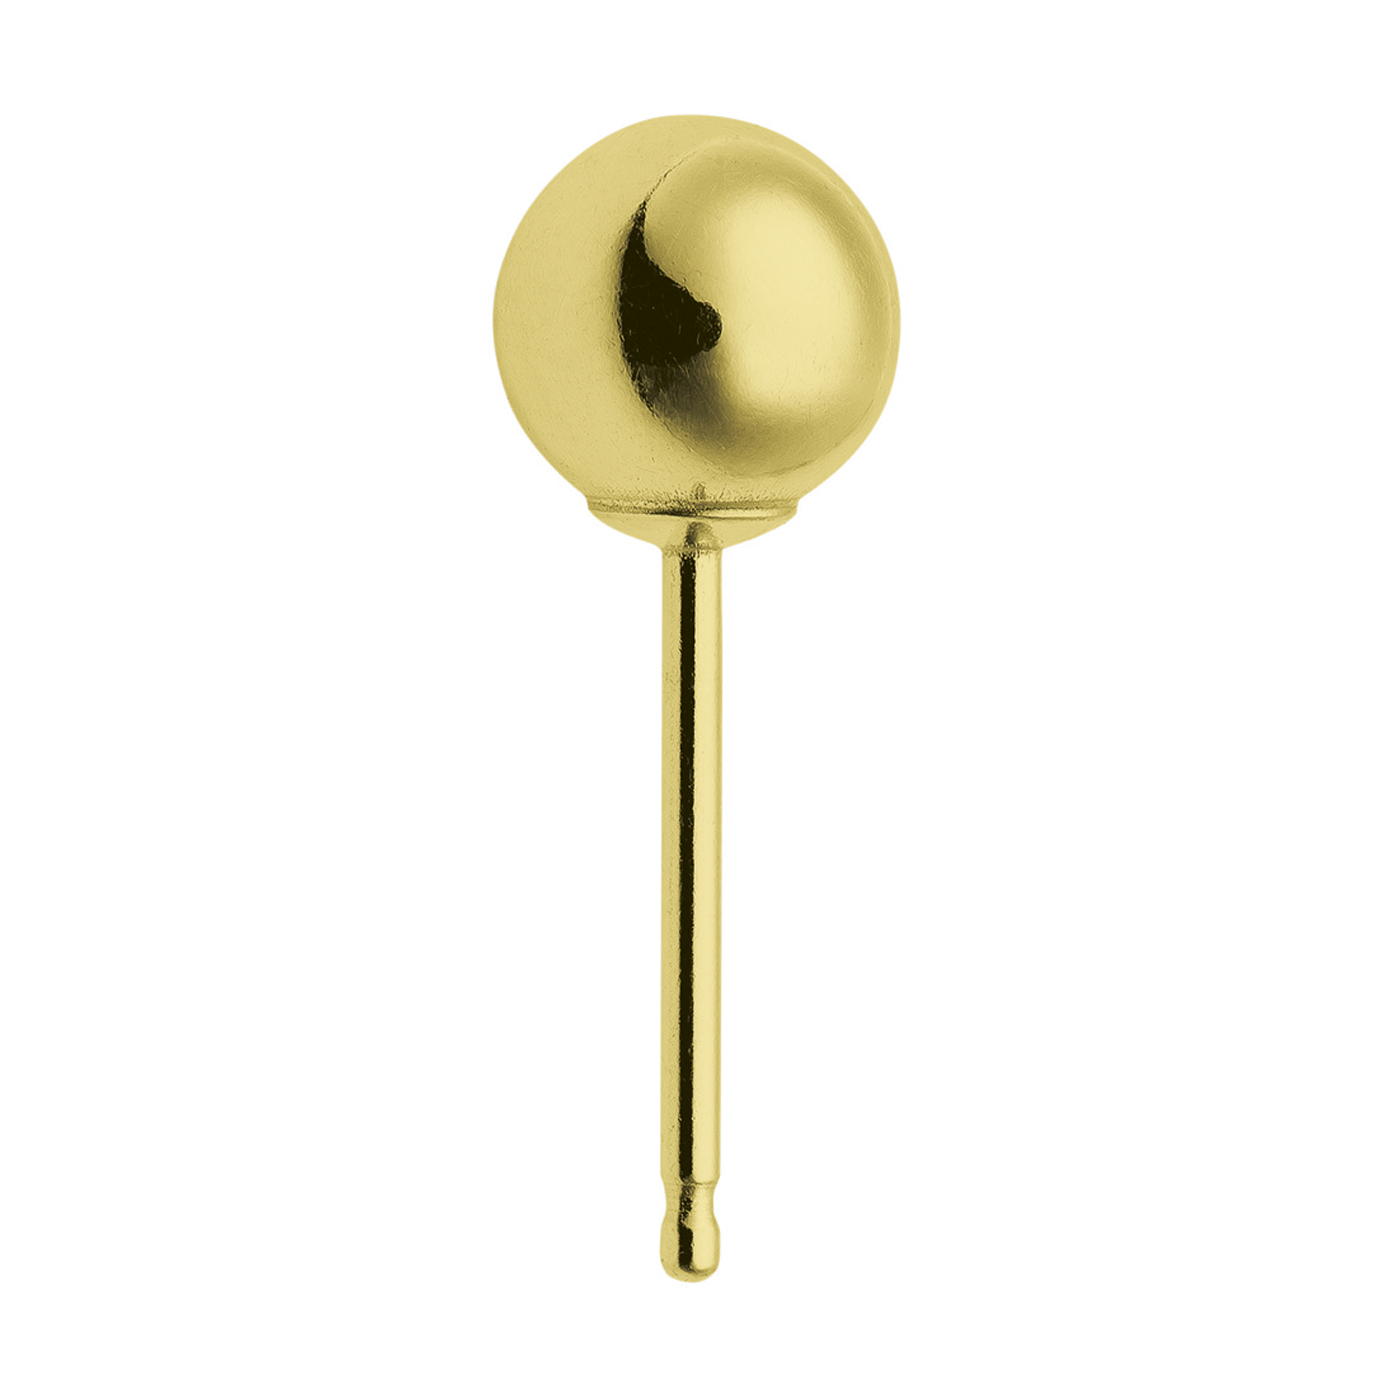 Ball Stud, Rolled Gold, ø 5 mm - 1 piece